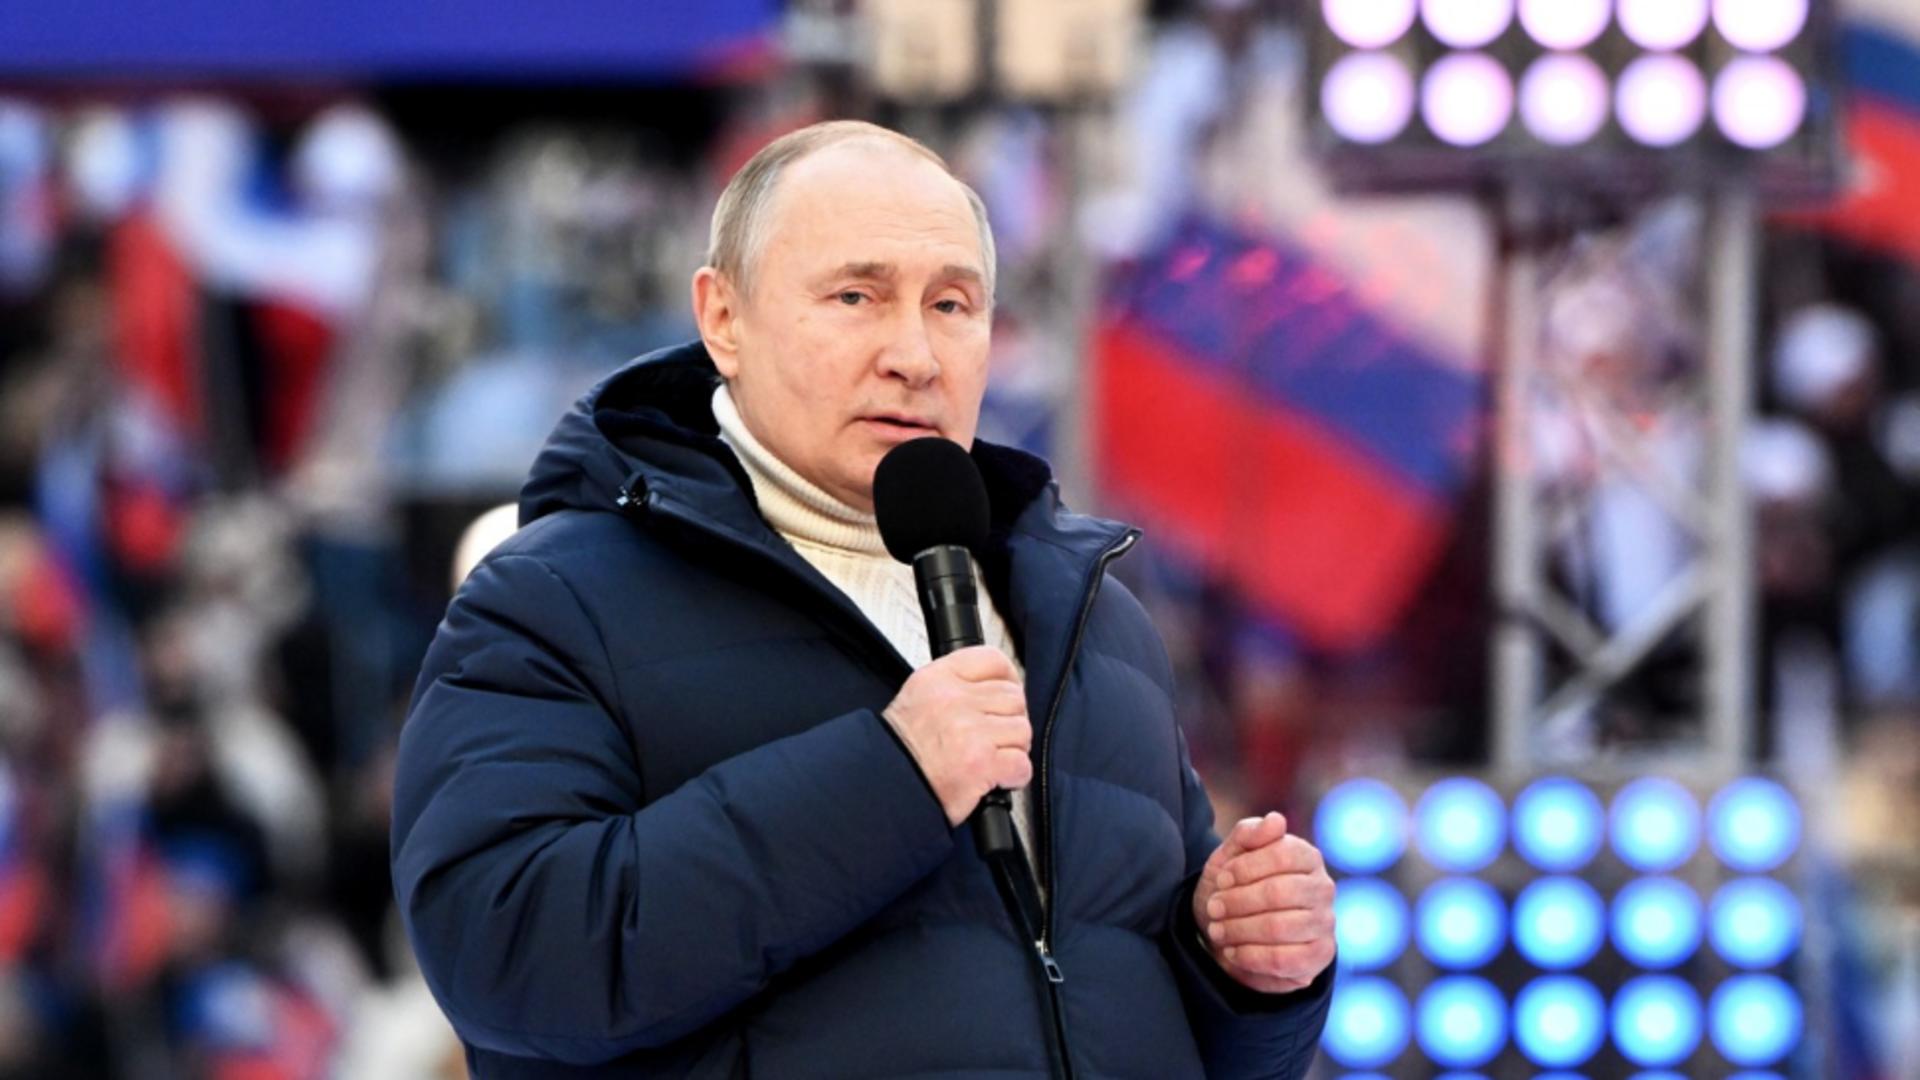 Vladimir Putin / Foto: SPUTNIK / Profi Media